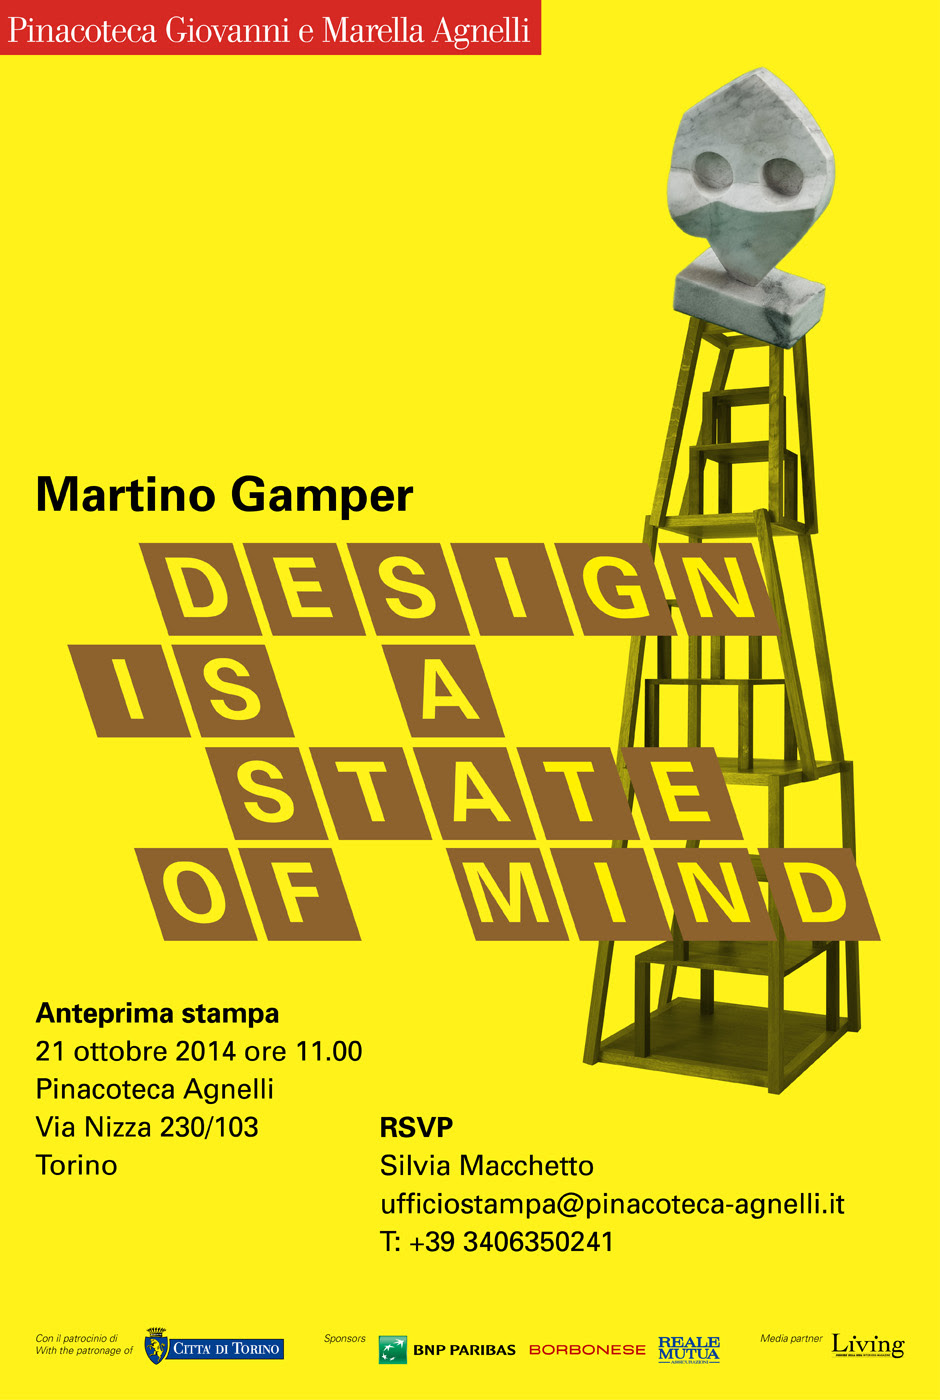 Martino Gamper – Design is a state of mind